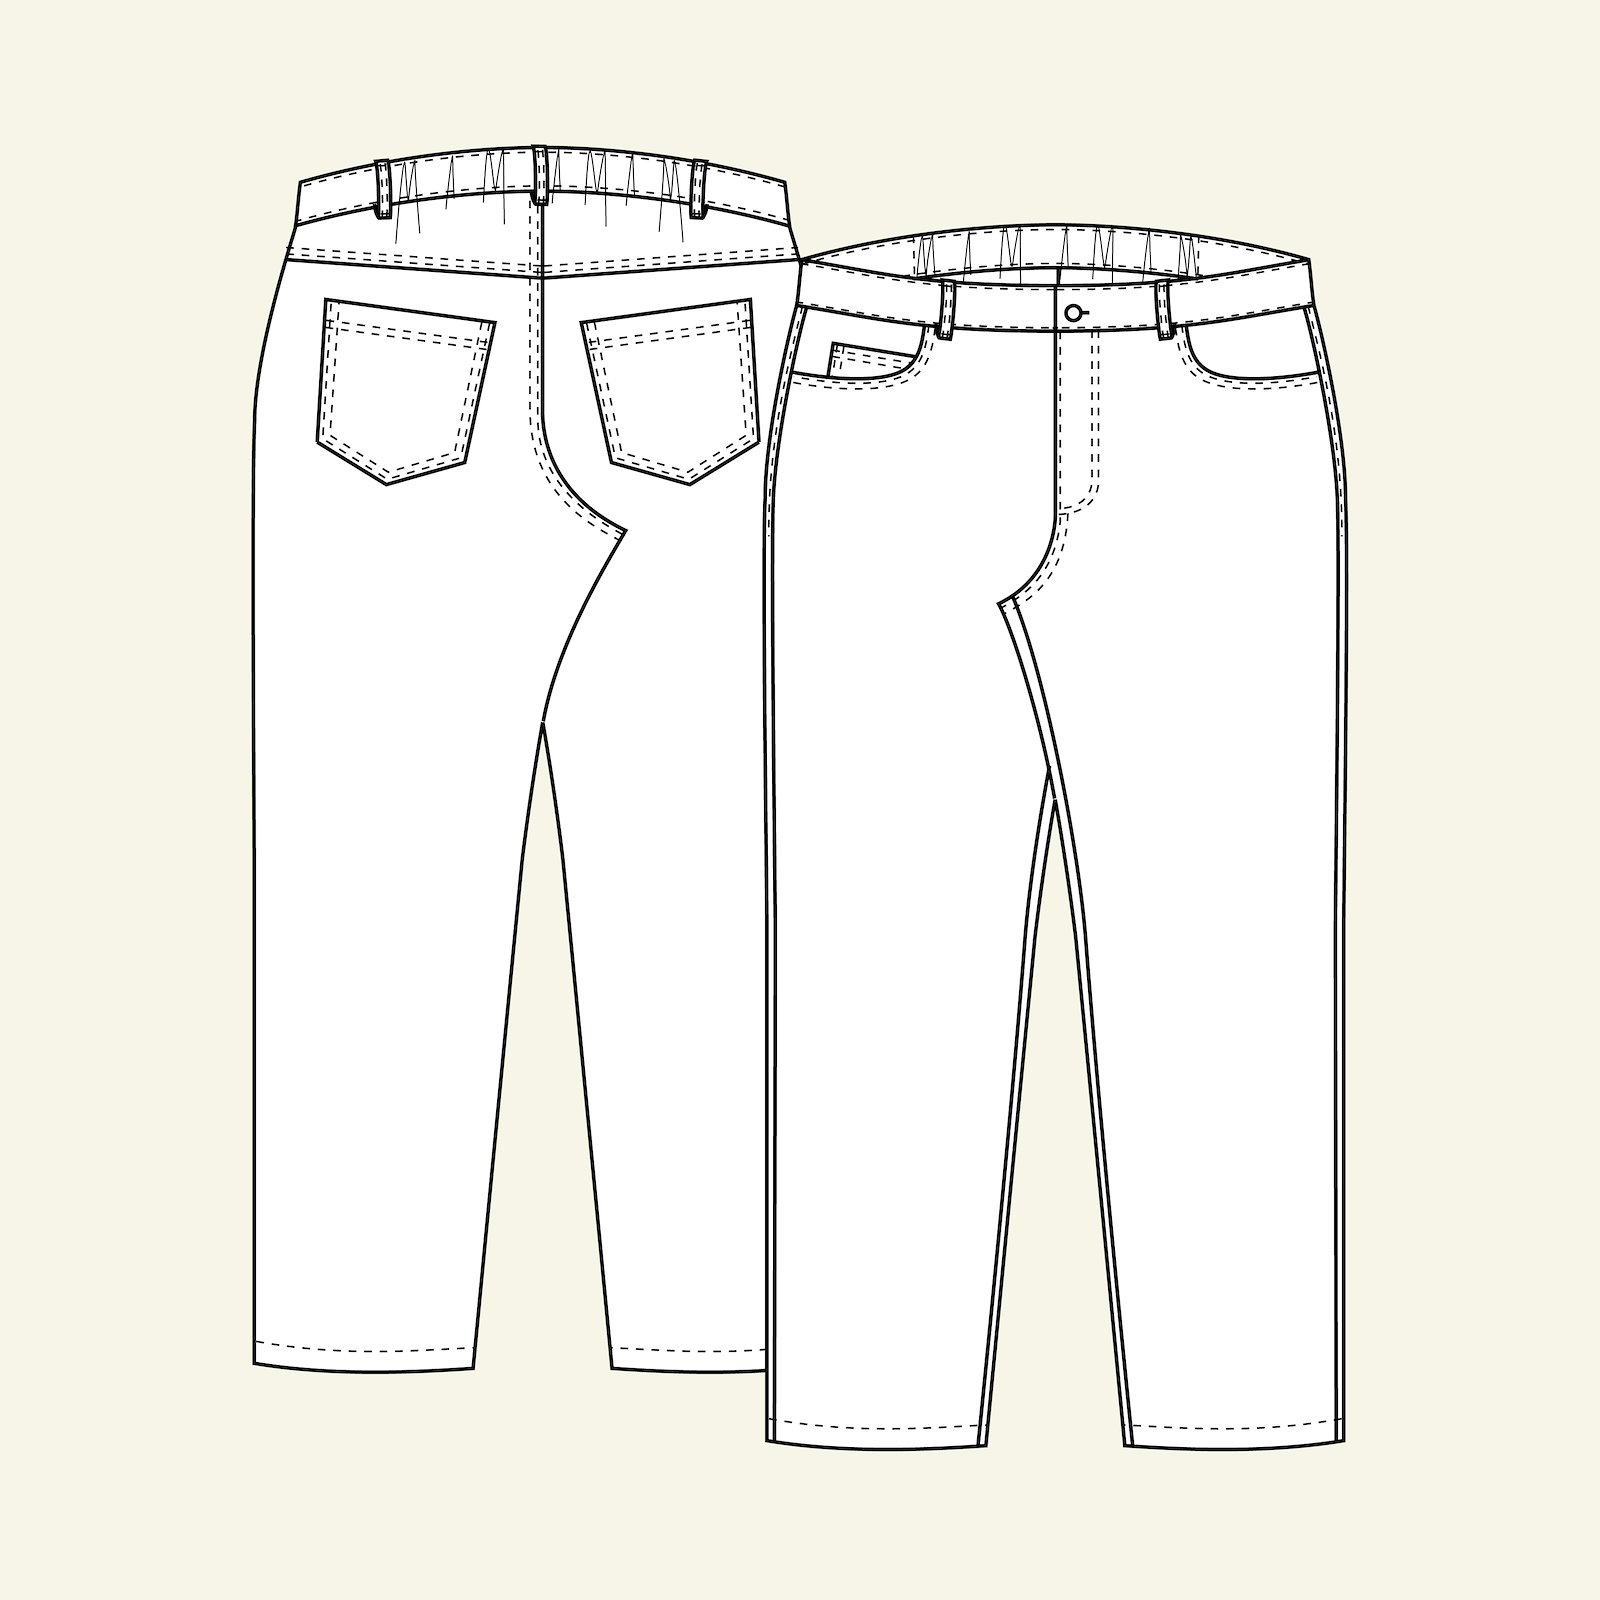 Klassisk jeans med resårlinning bak, 52 p70007000_p70007001_p70007002_p70007003_p70007004_pack_b